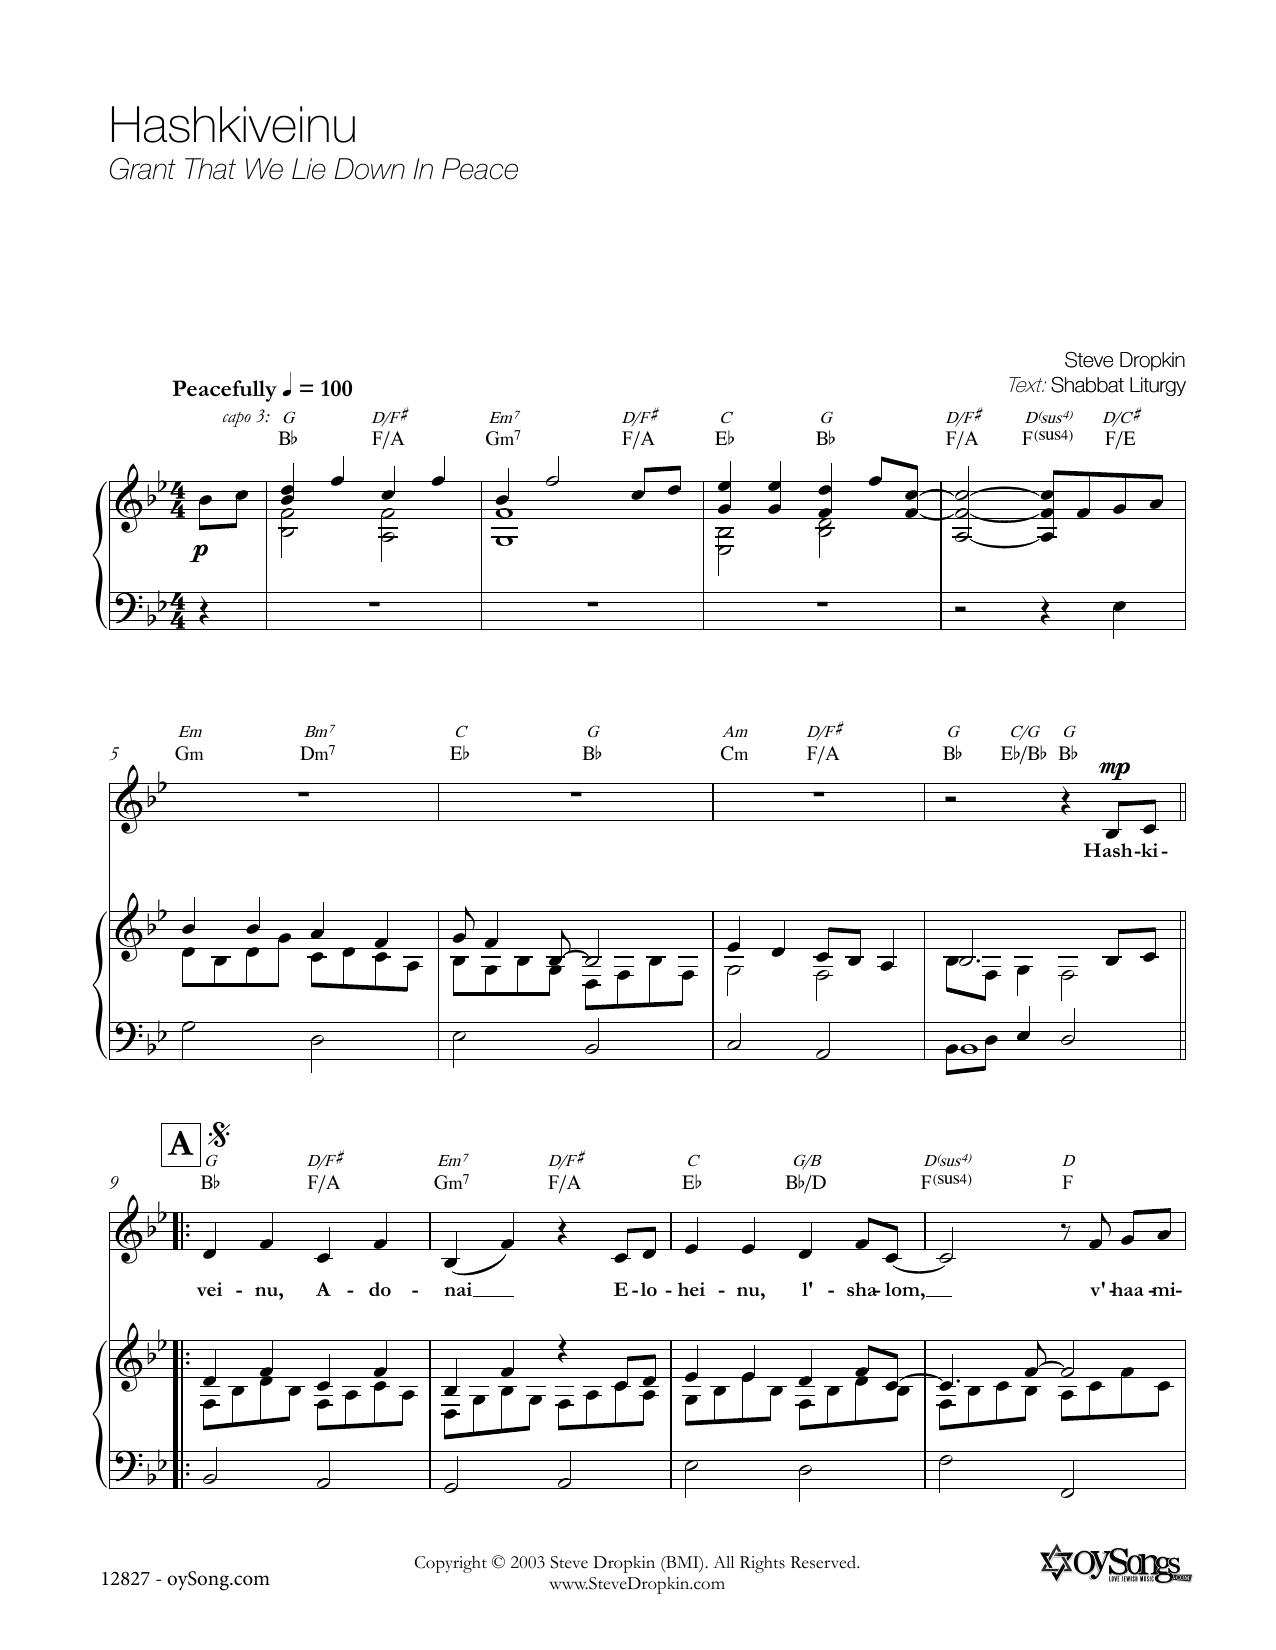 Steve Dropkin Hashkiveinu Sheet Music Notes & Chords for Melody Line, Lyrics & Chords - Download or Print PDF